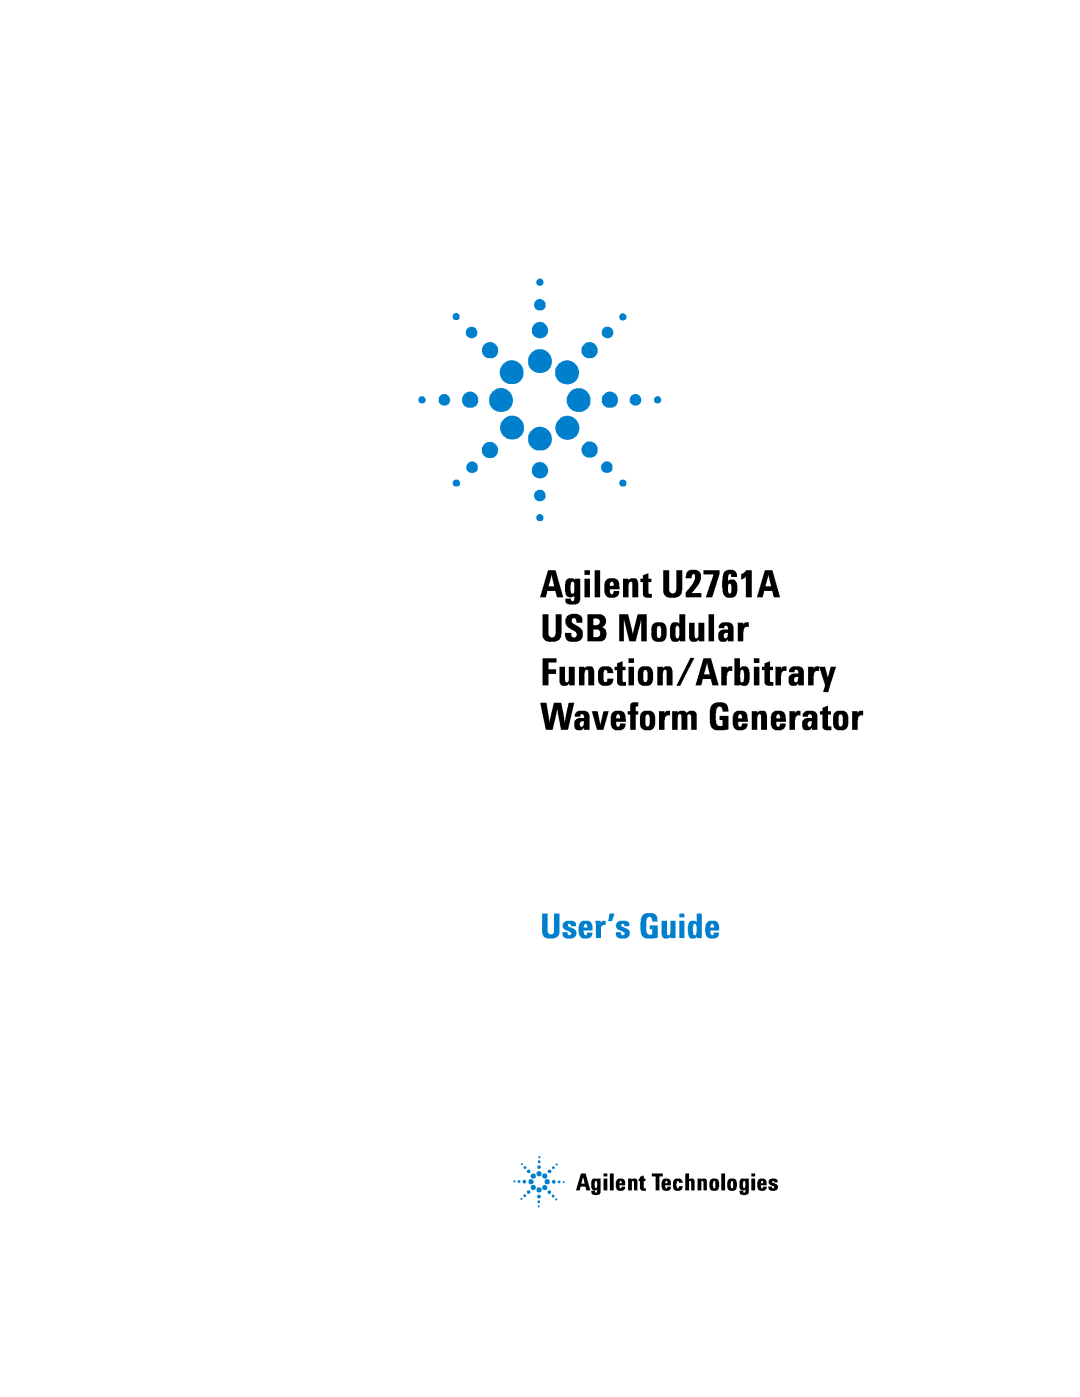 Agilent Technologies manual Agilent U2761A USB Modular Function/Arbitrary Waveform Generator, User’s Guide 